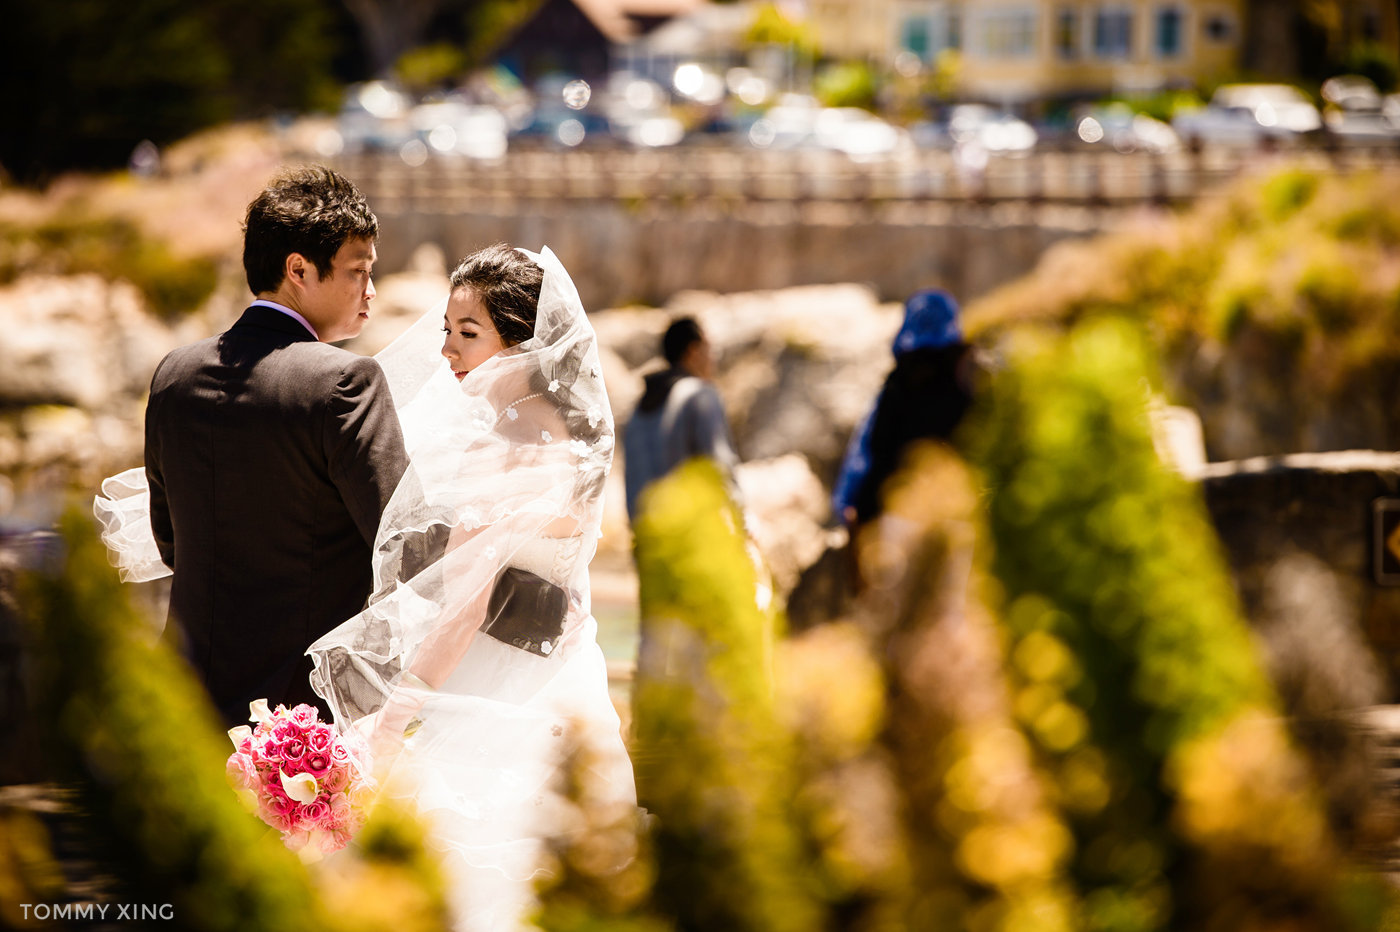 Lovers Point Park Wedding Monterey Wenping & Li  San Francisco Bay Area 旧金山湾区 洛杉矶婚礼婚纱照摄影师 Tommy Xing Photography 124.jpg